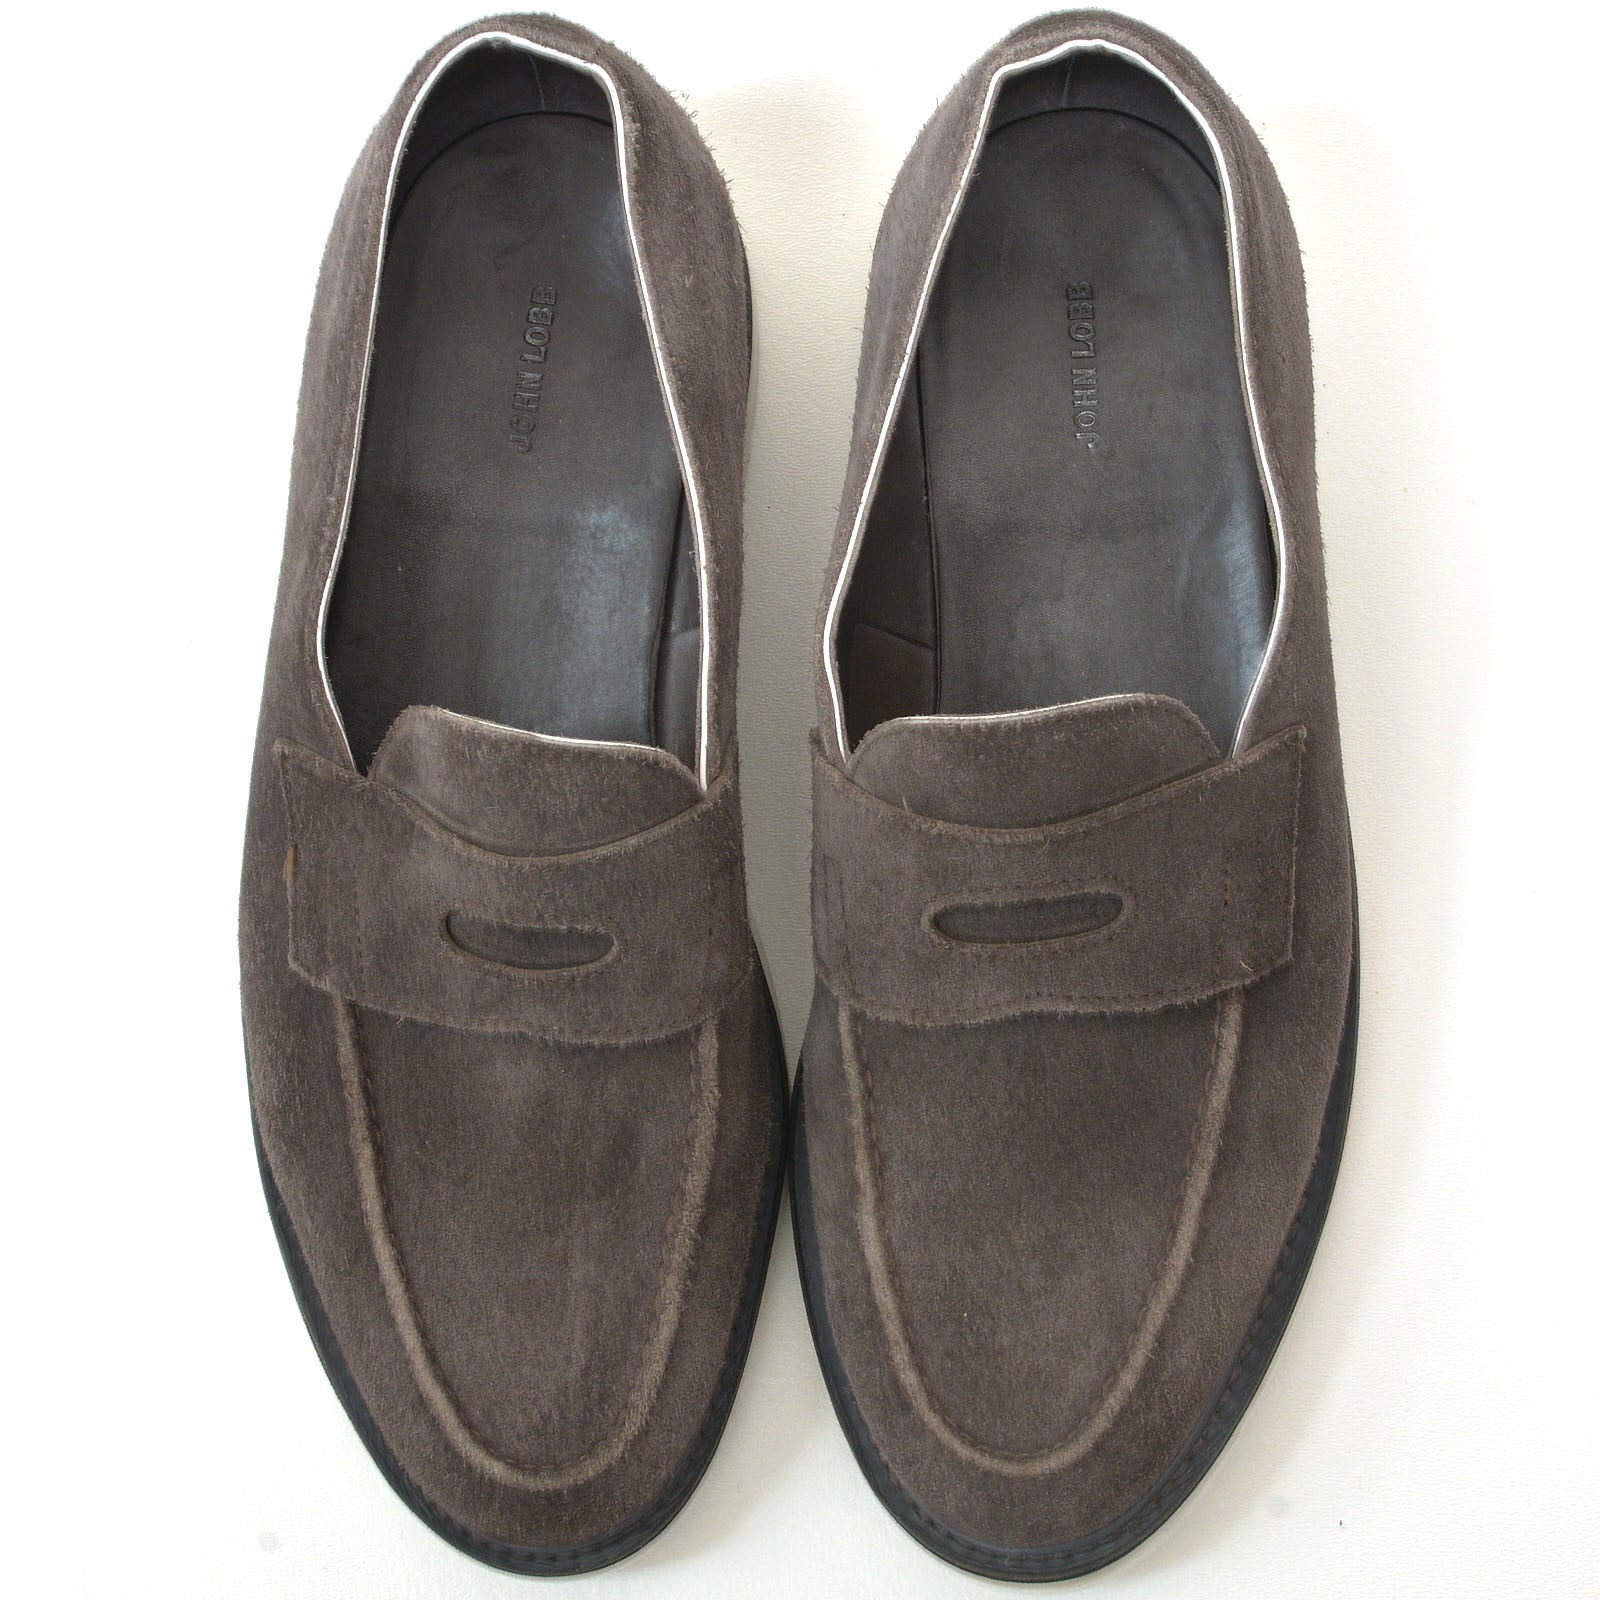 JOHN LOBB "Lopez" Gray Suede Leather Penny Loafer Shoes UK 8.5E US 9.5 JOHN LOBB